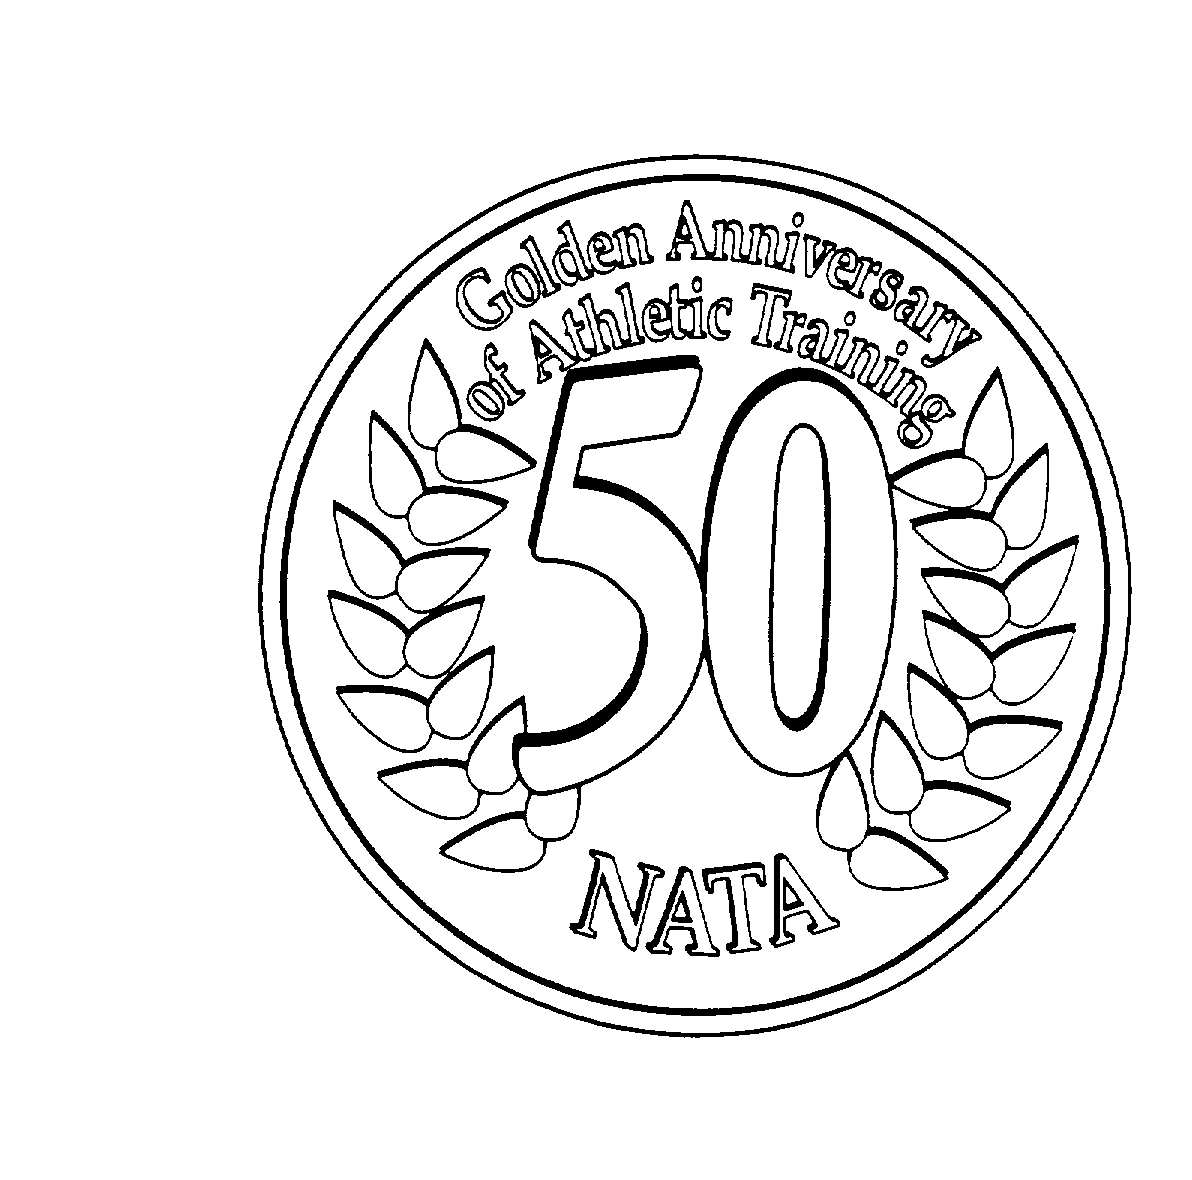  GOLDEN ANNIVERSARY OF ATHLETIC TRAINING 50 NATA